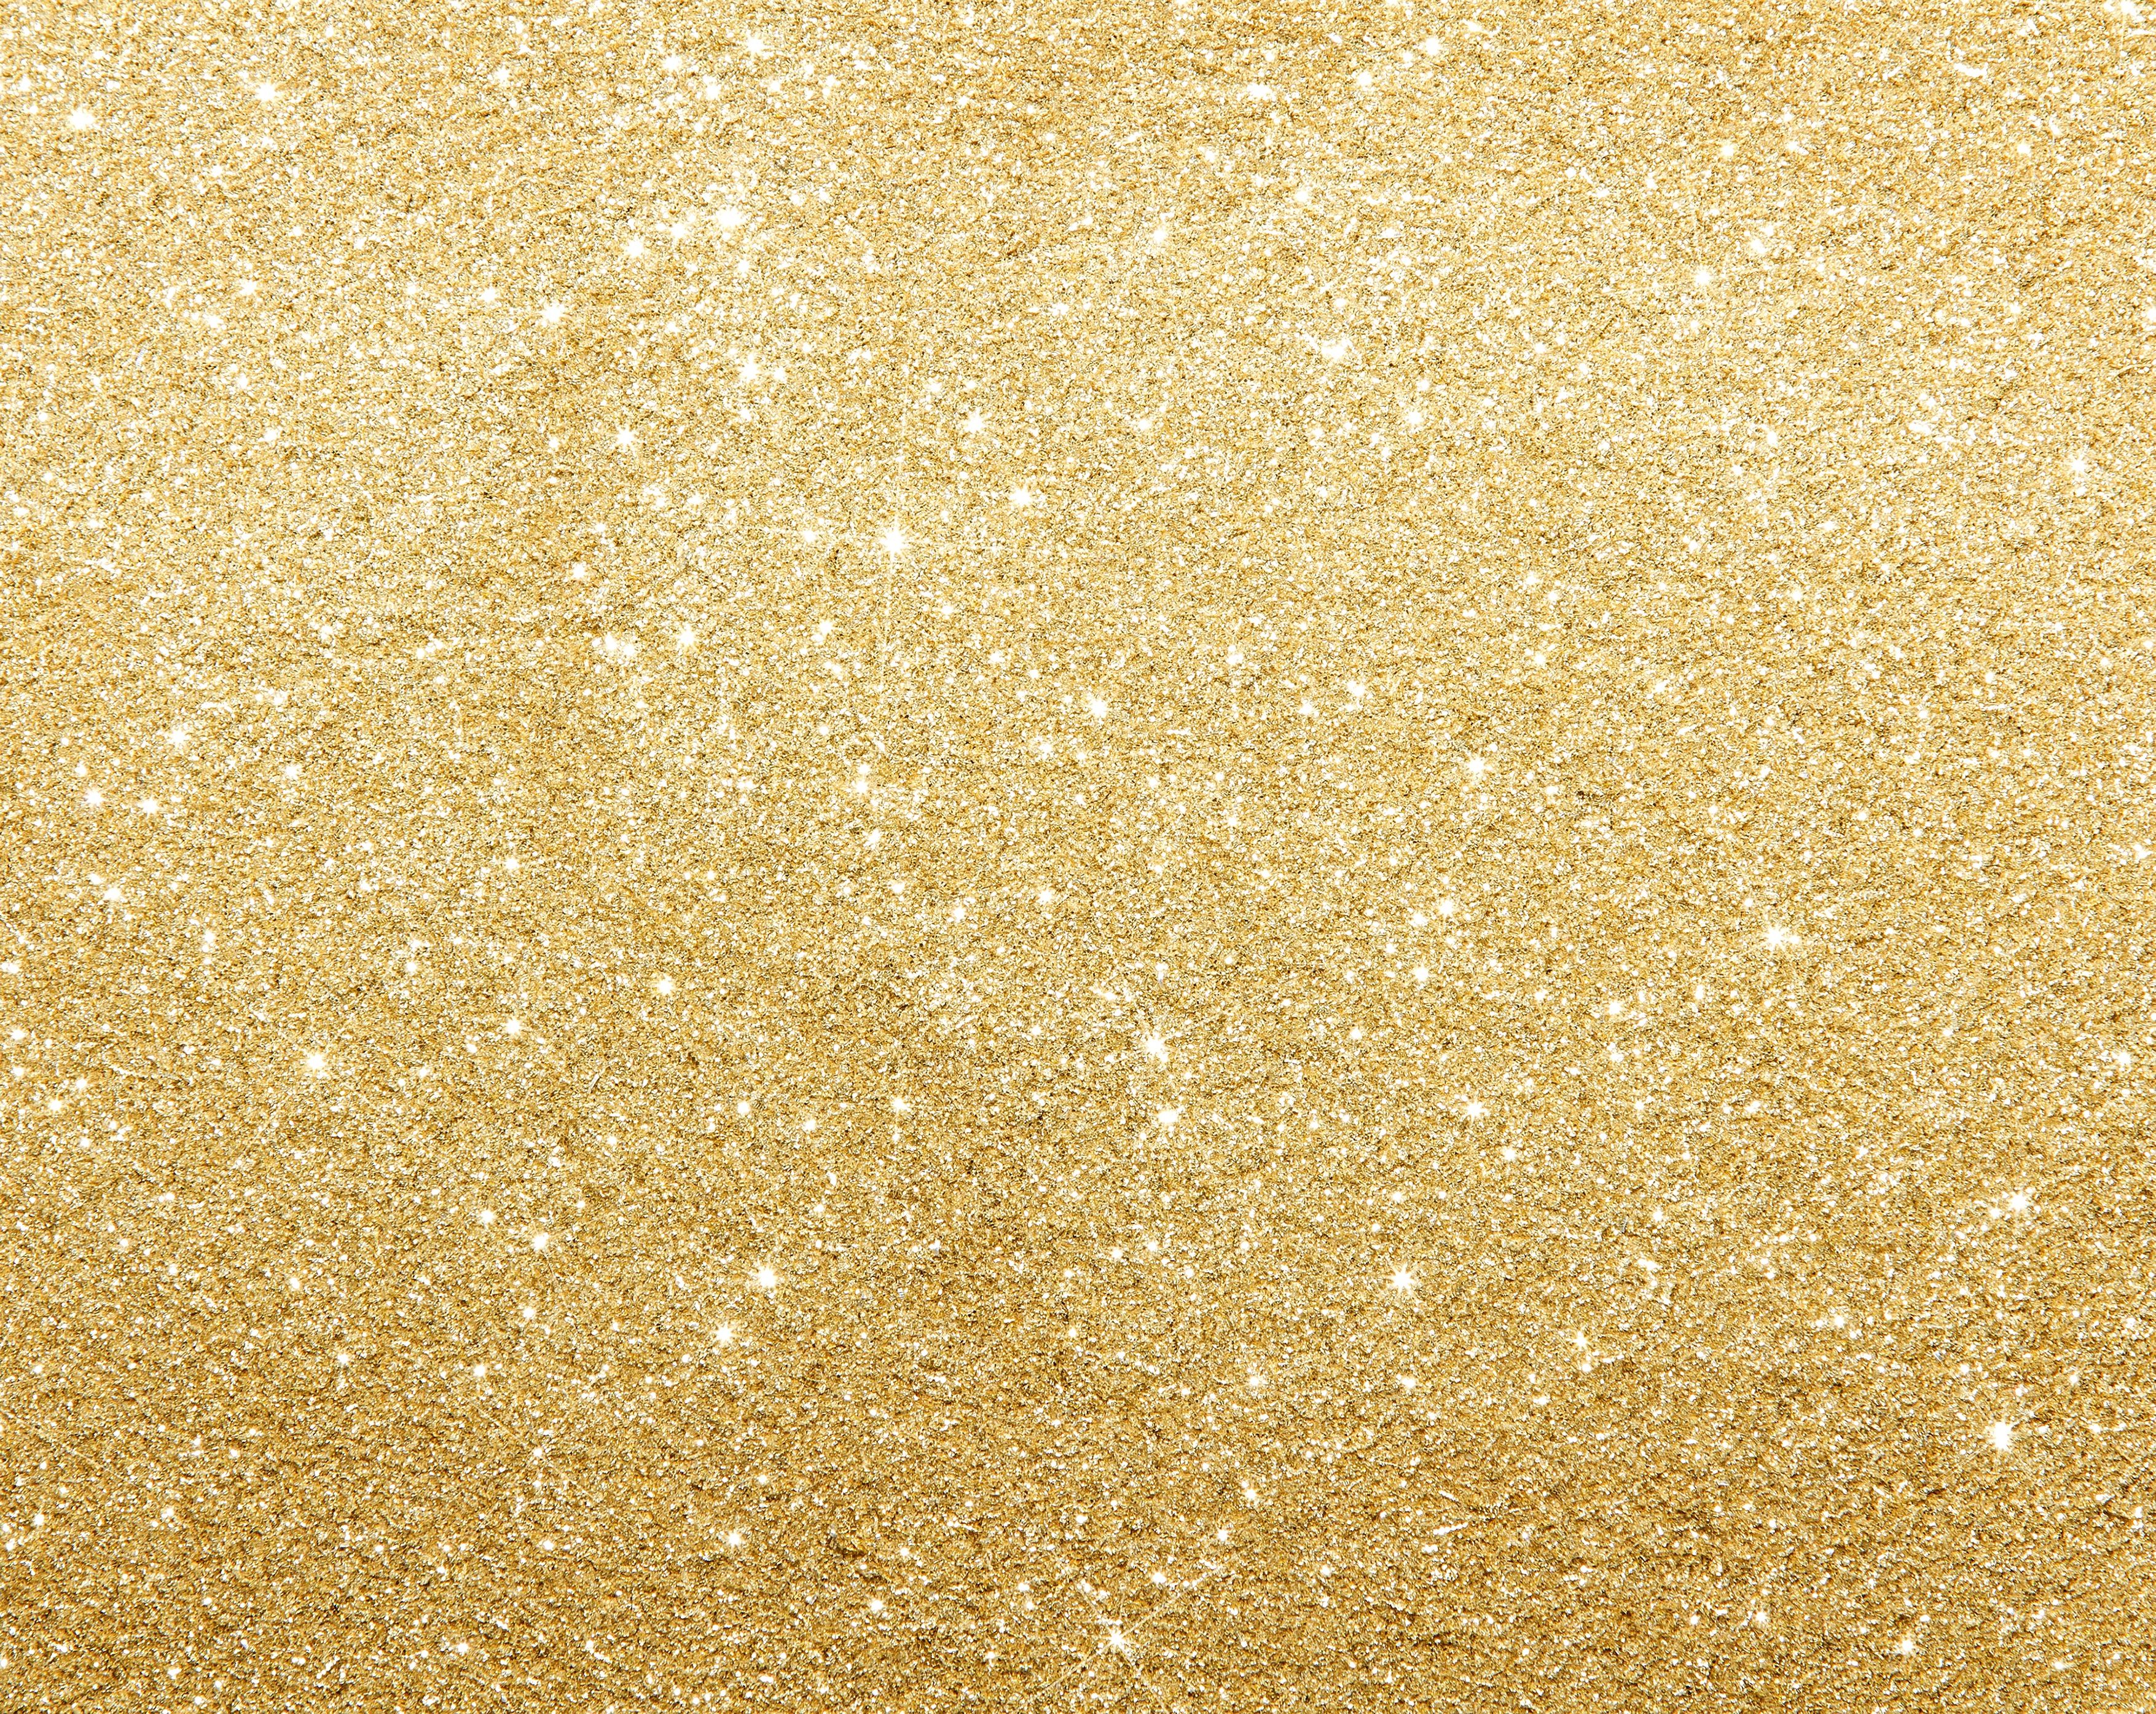 Gold Glitter Iphone Backgrounds Gold glitter t